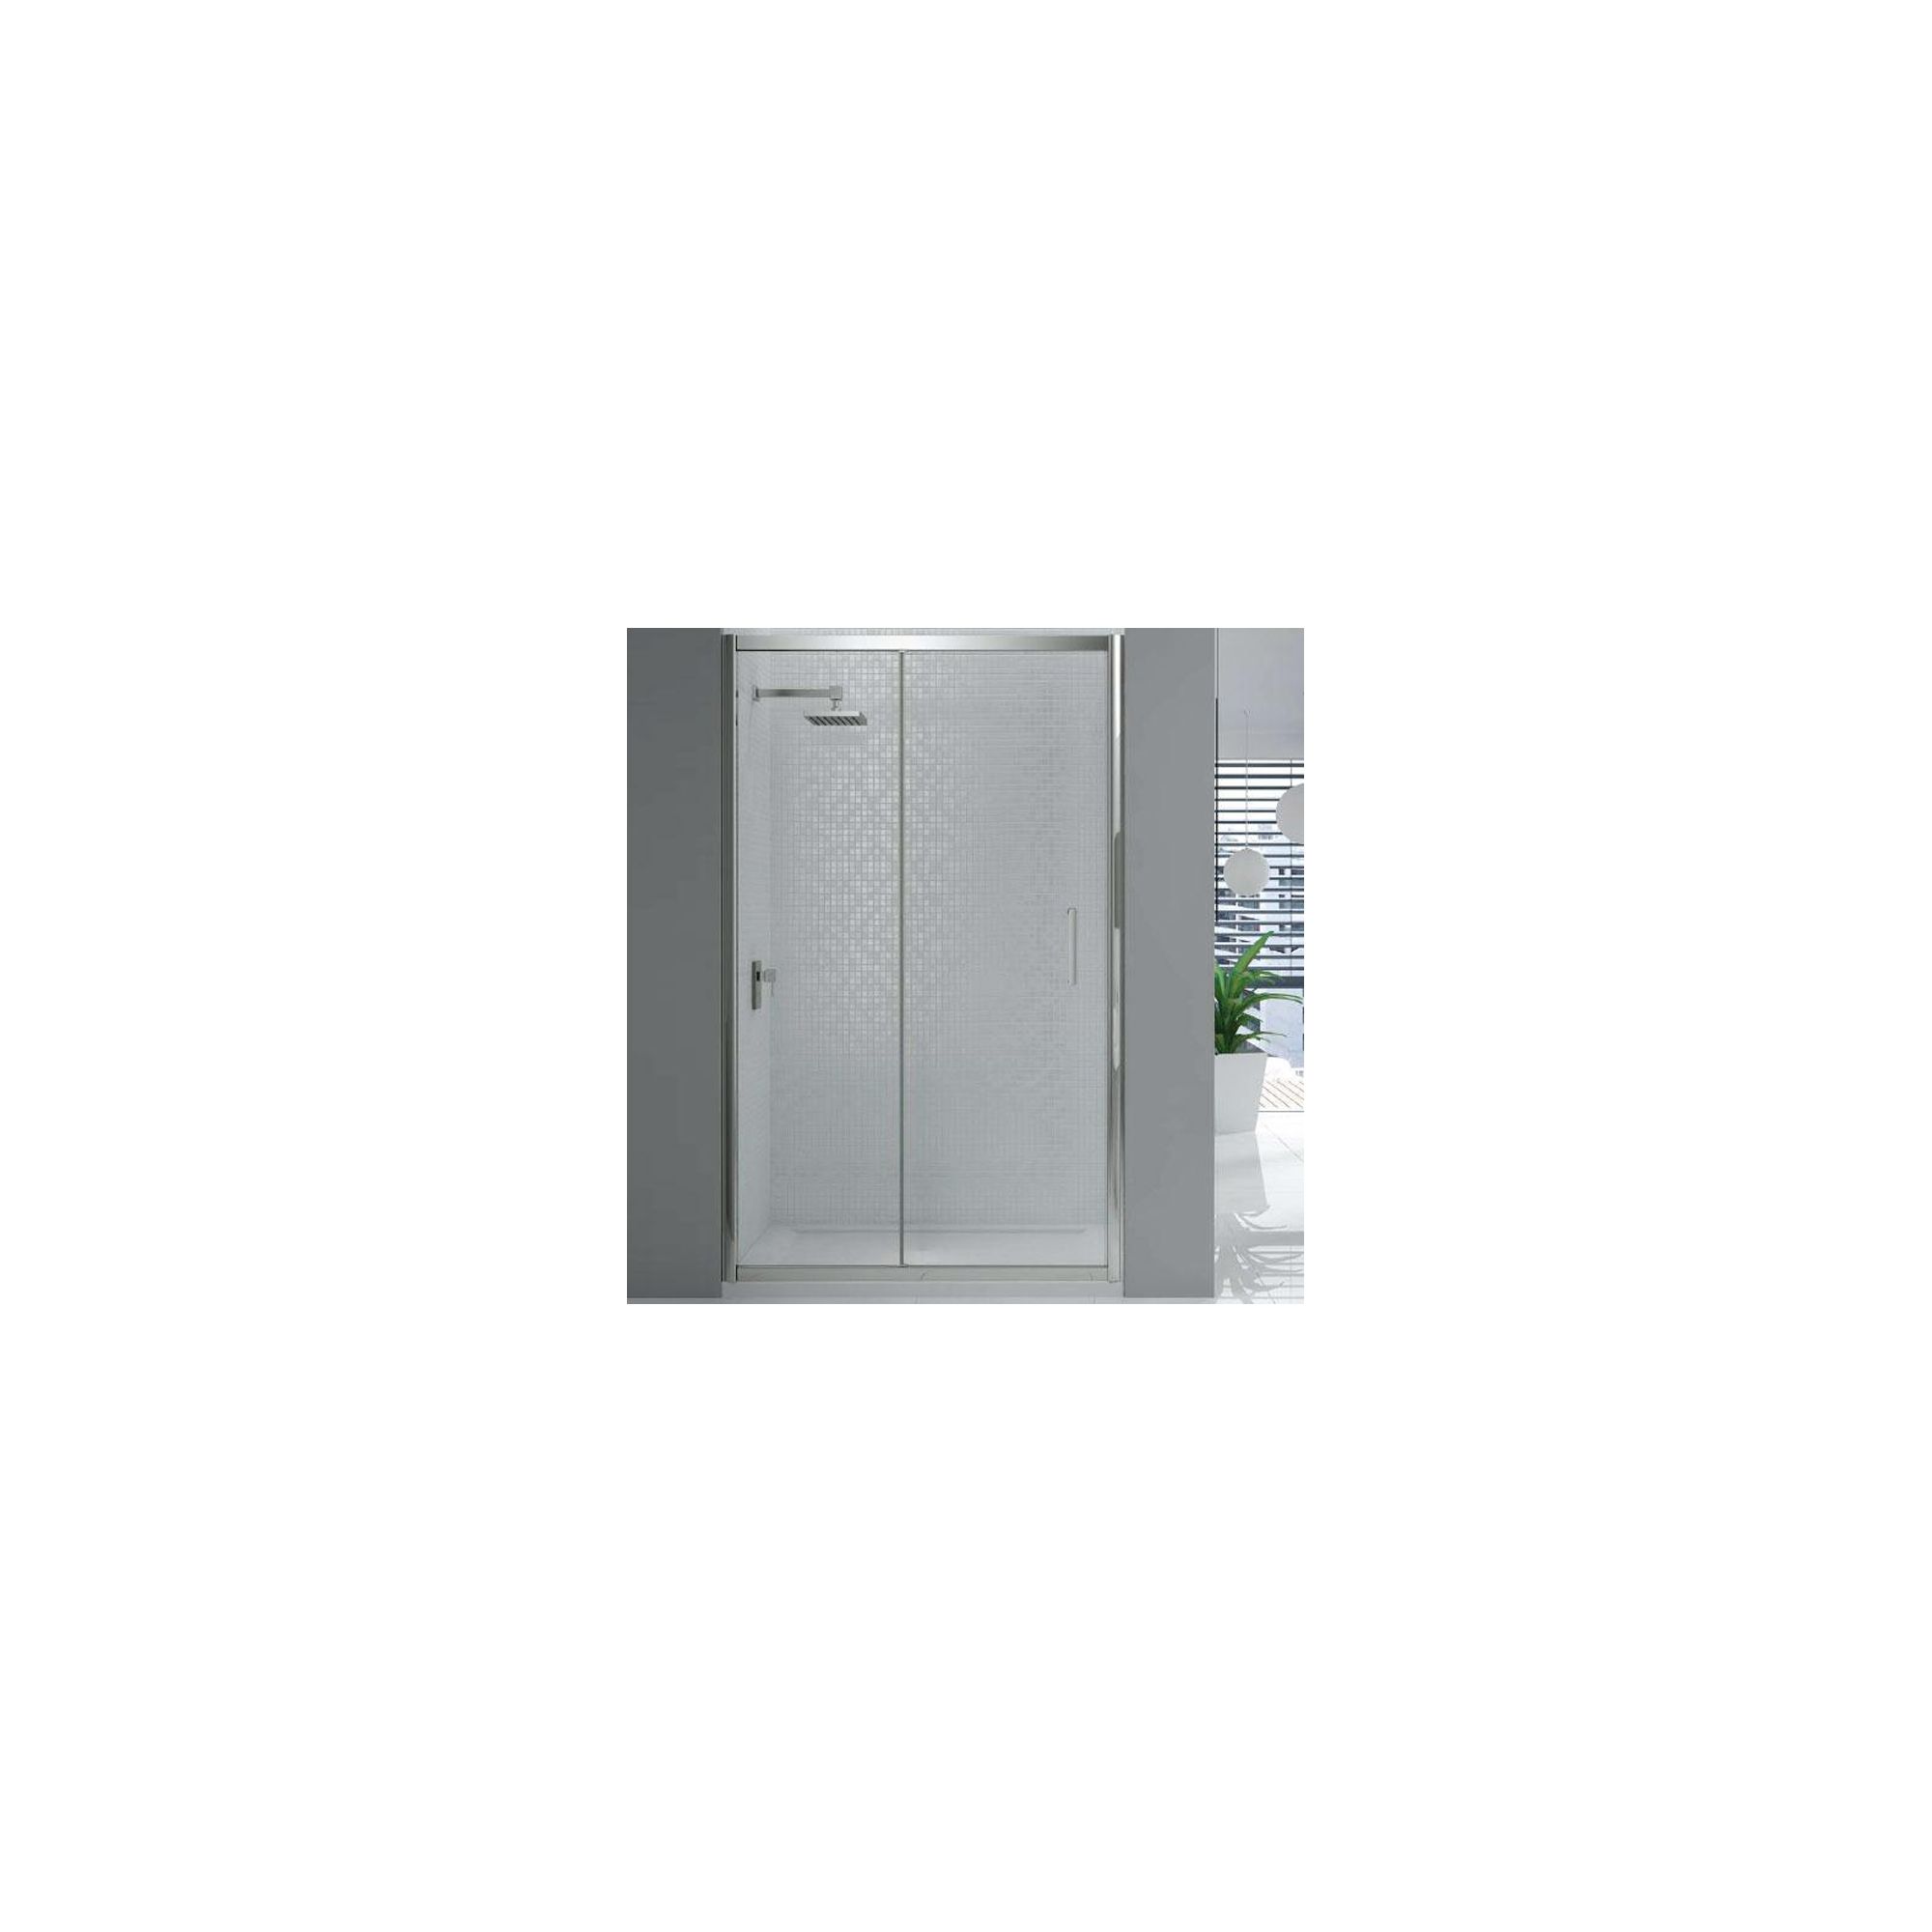 Merlyn Vivid Six Sliding Shower Door, 1200mm Wide, 6mm Glass at Tesco Direct